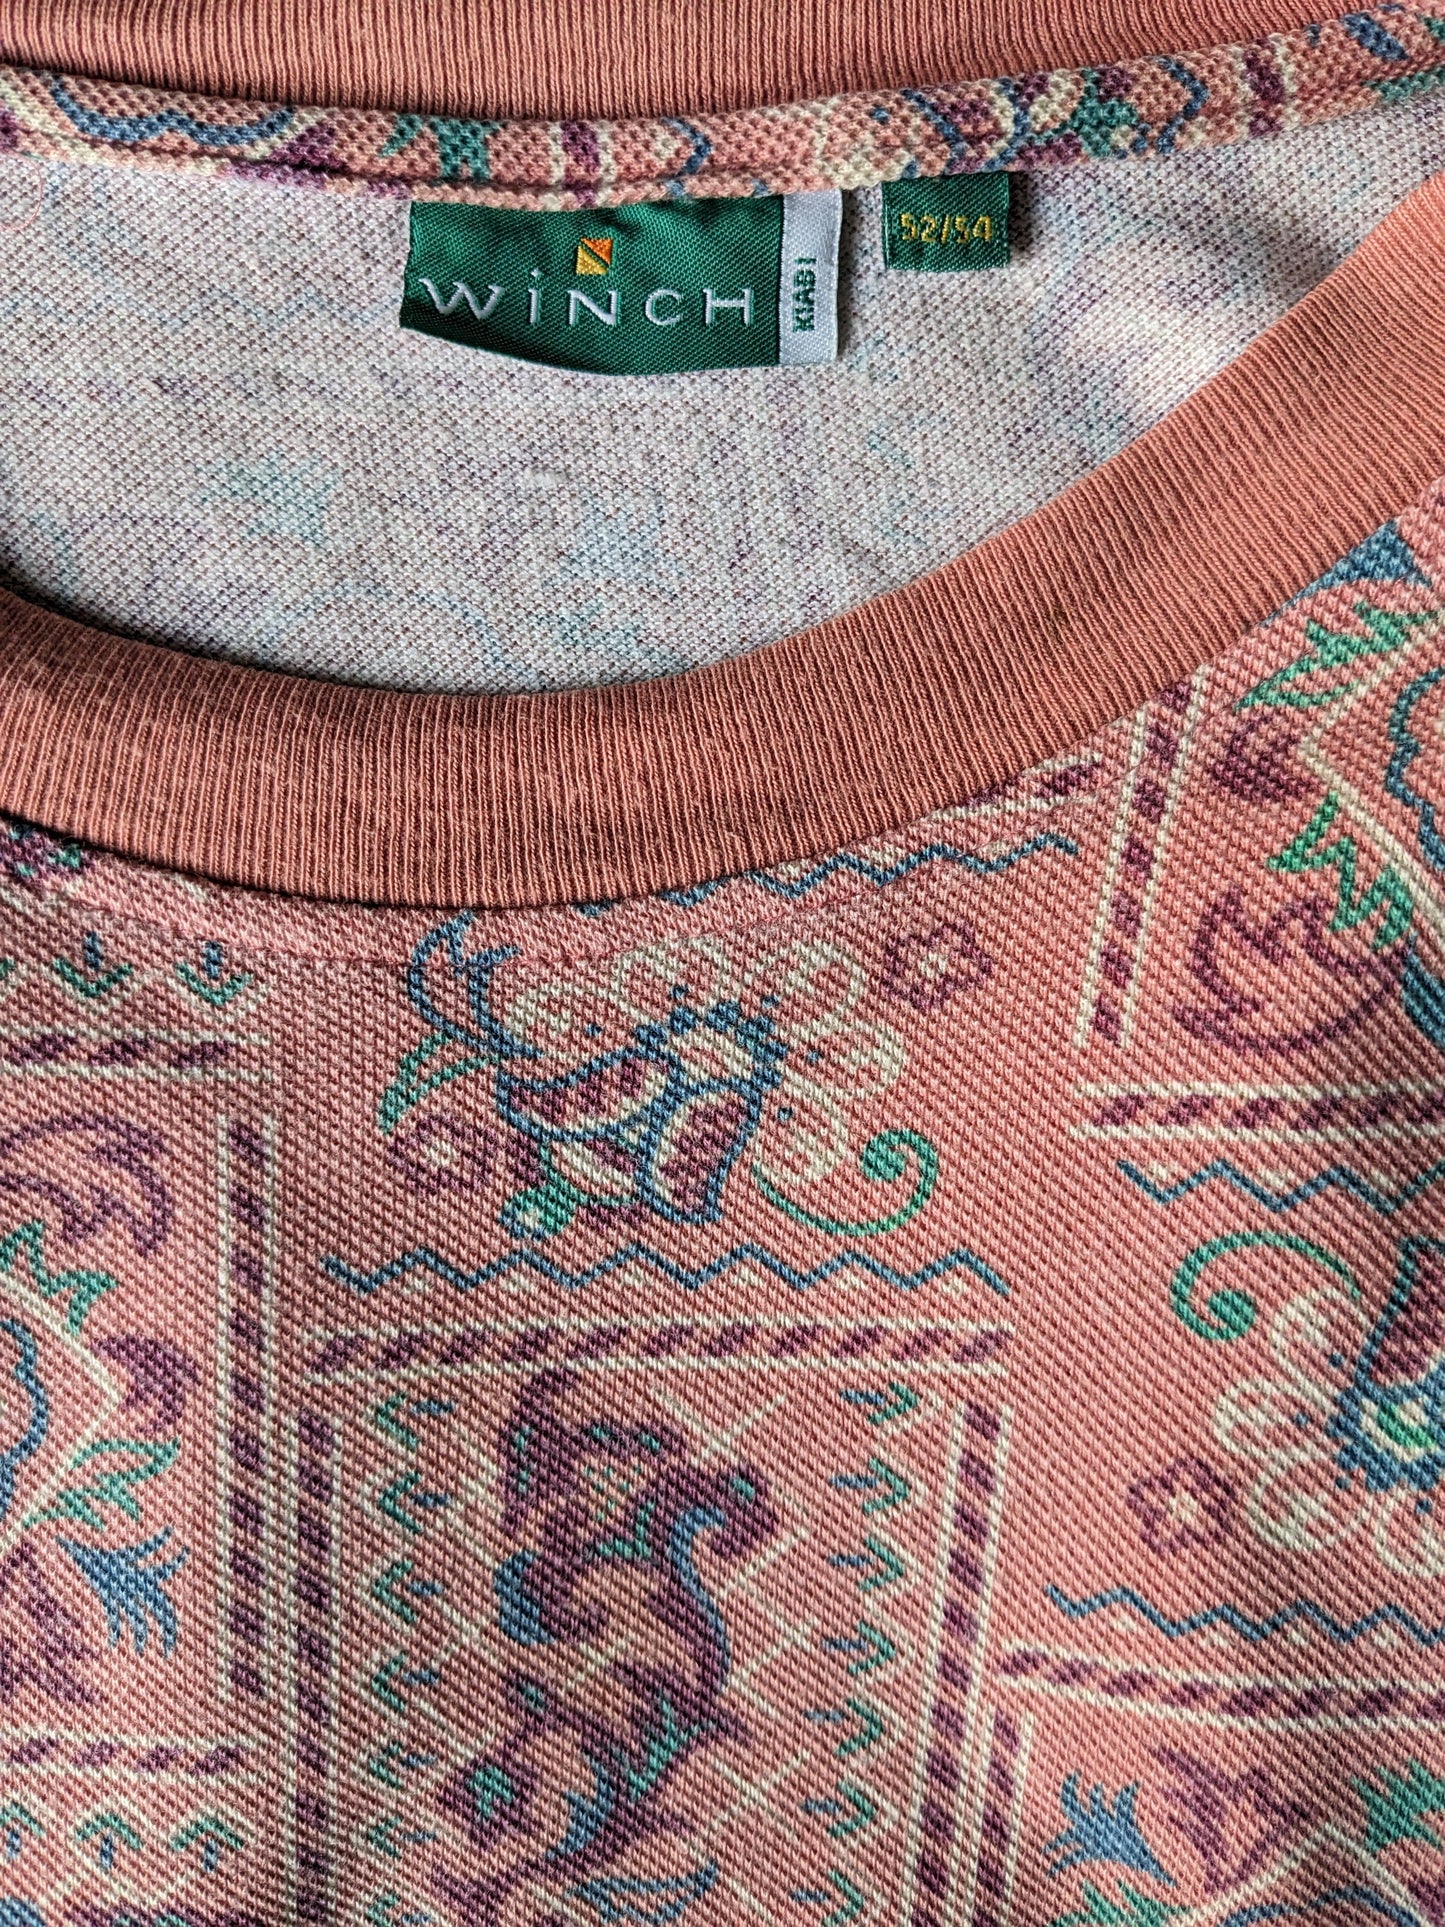 Vintage Winch shirt. Roze Rood Blauw Groene print. Maat L.